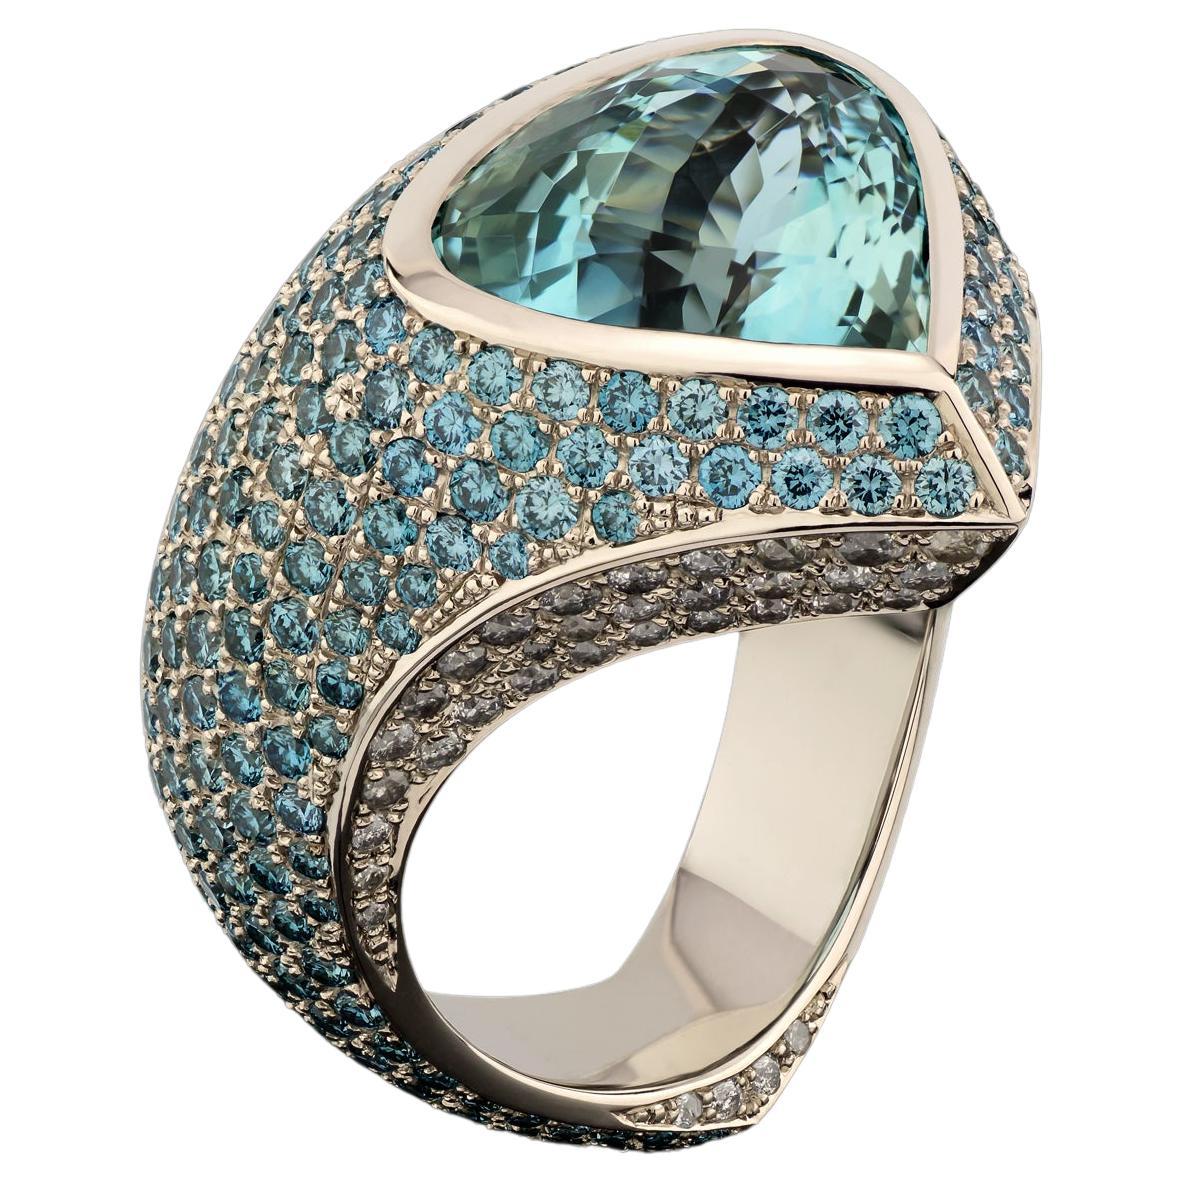 Aquamarine Cocktail Ring 6.24ct Blue, 18k White Gold, 357 hand set diamonds